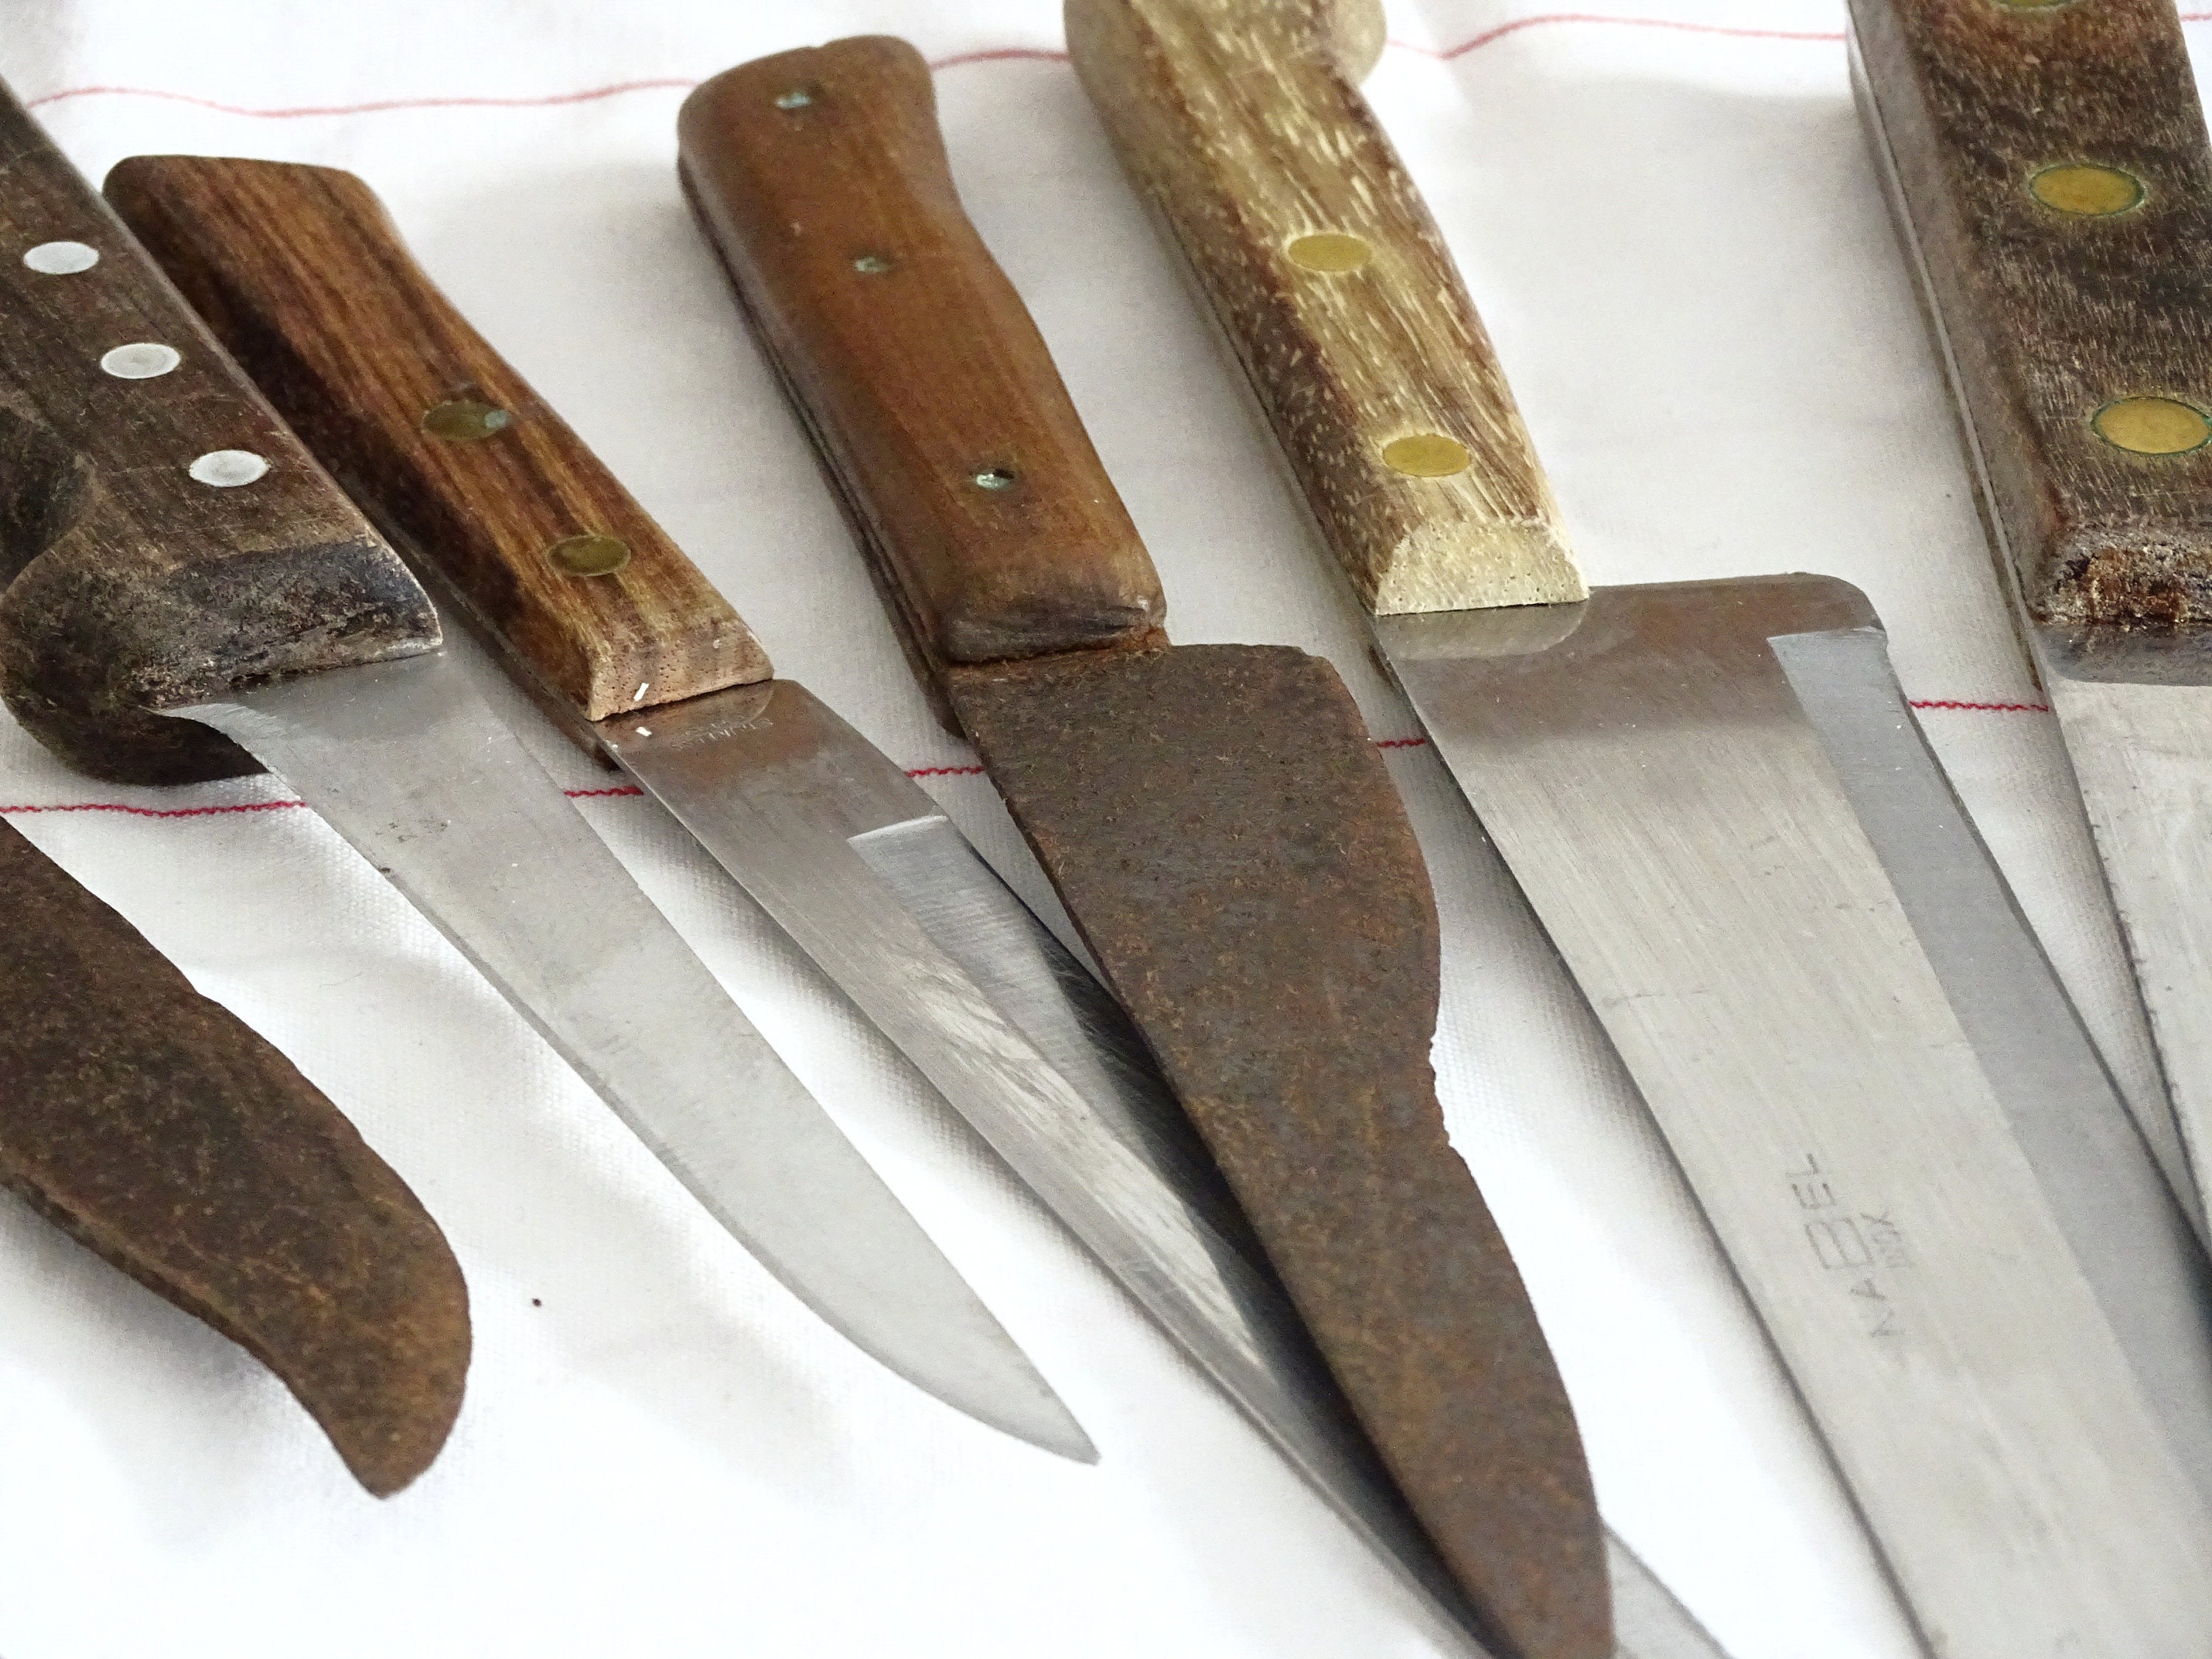 Vintage Wood Handled Kitchen Knife Old Big Knives With Wooden or